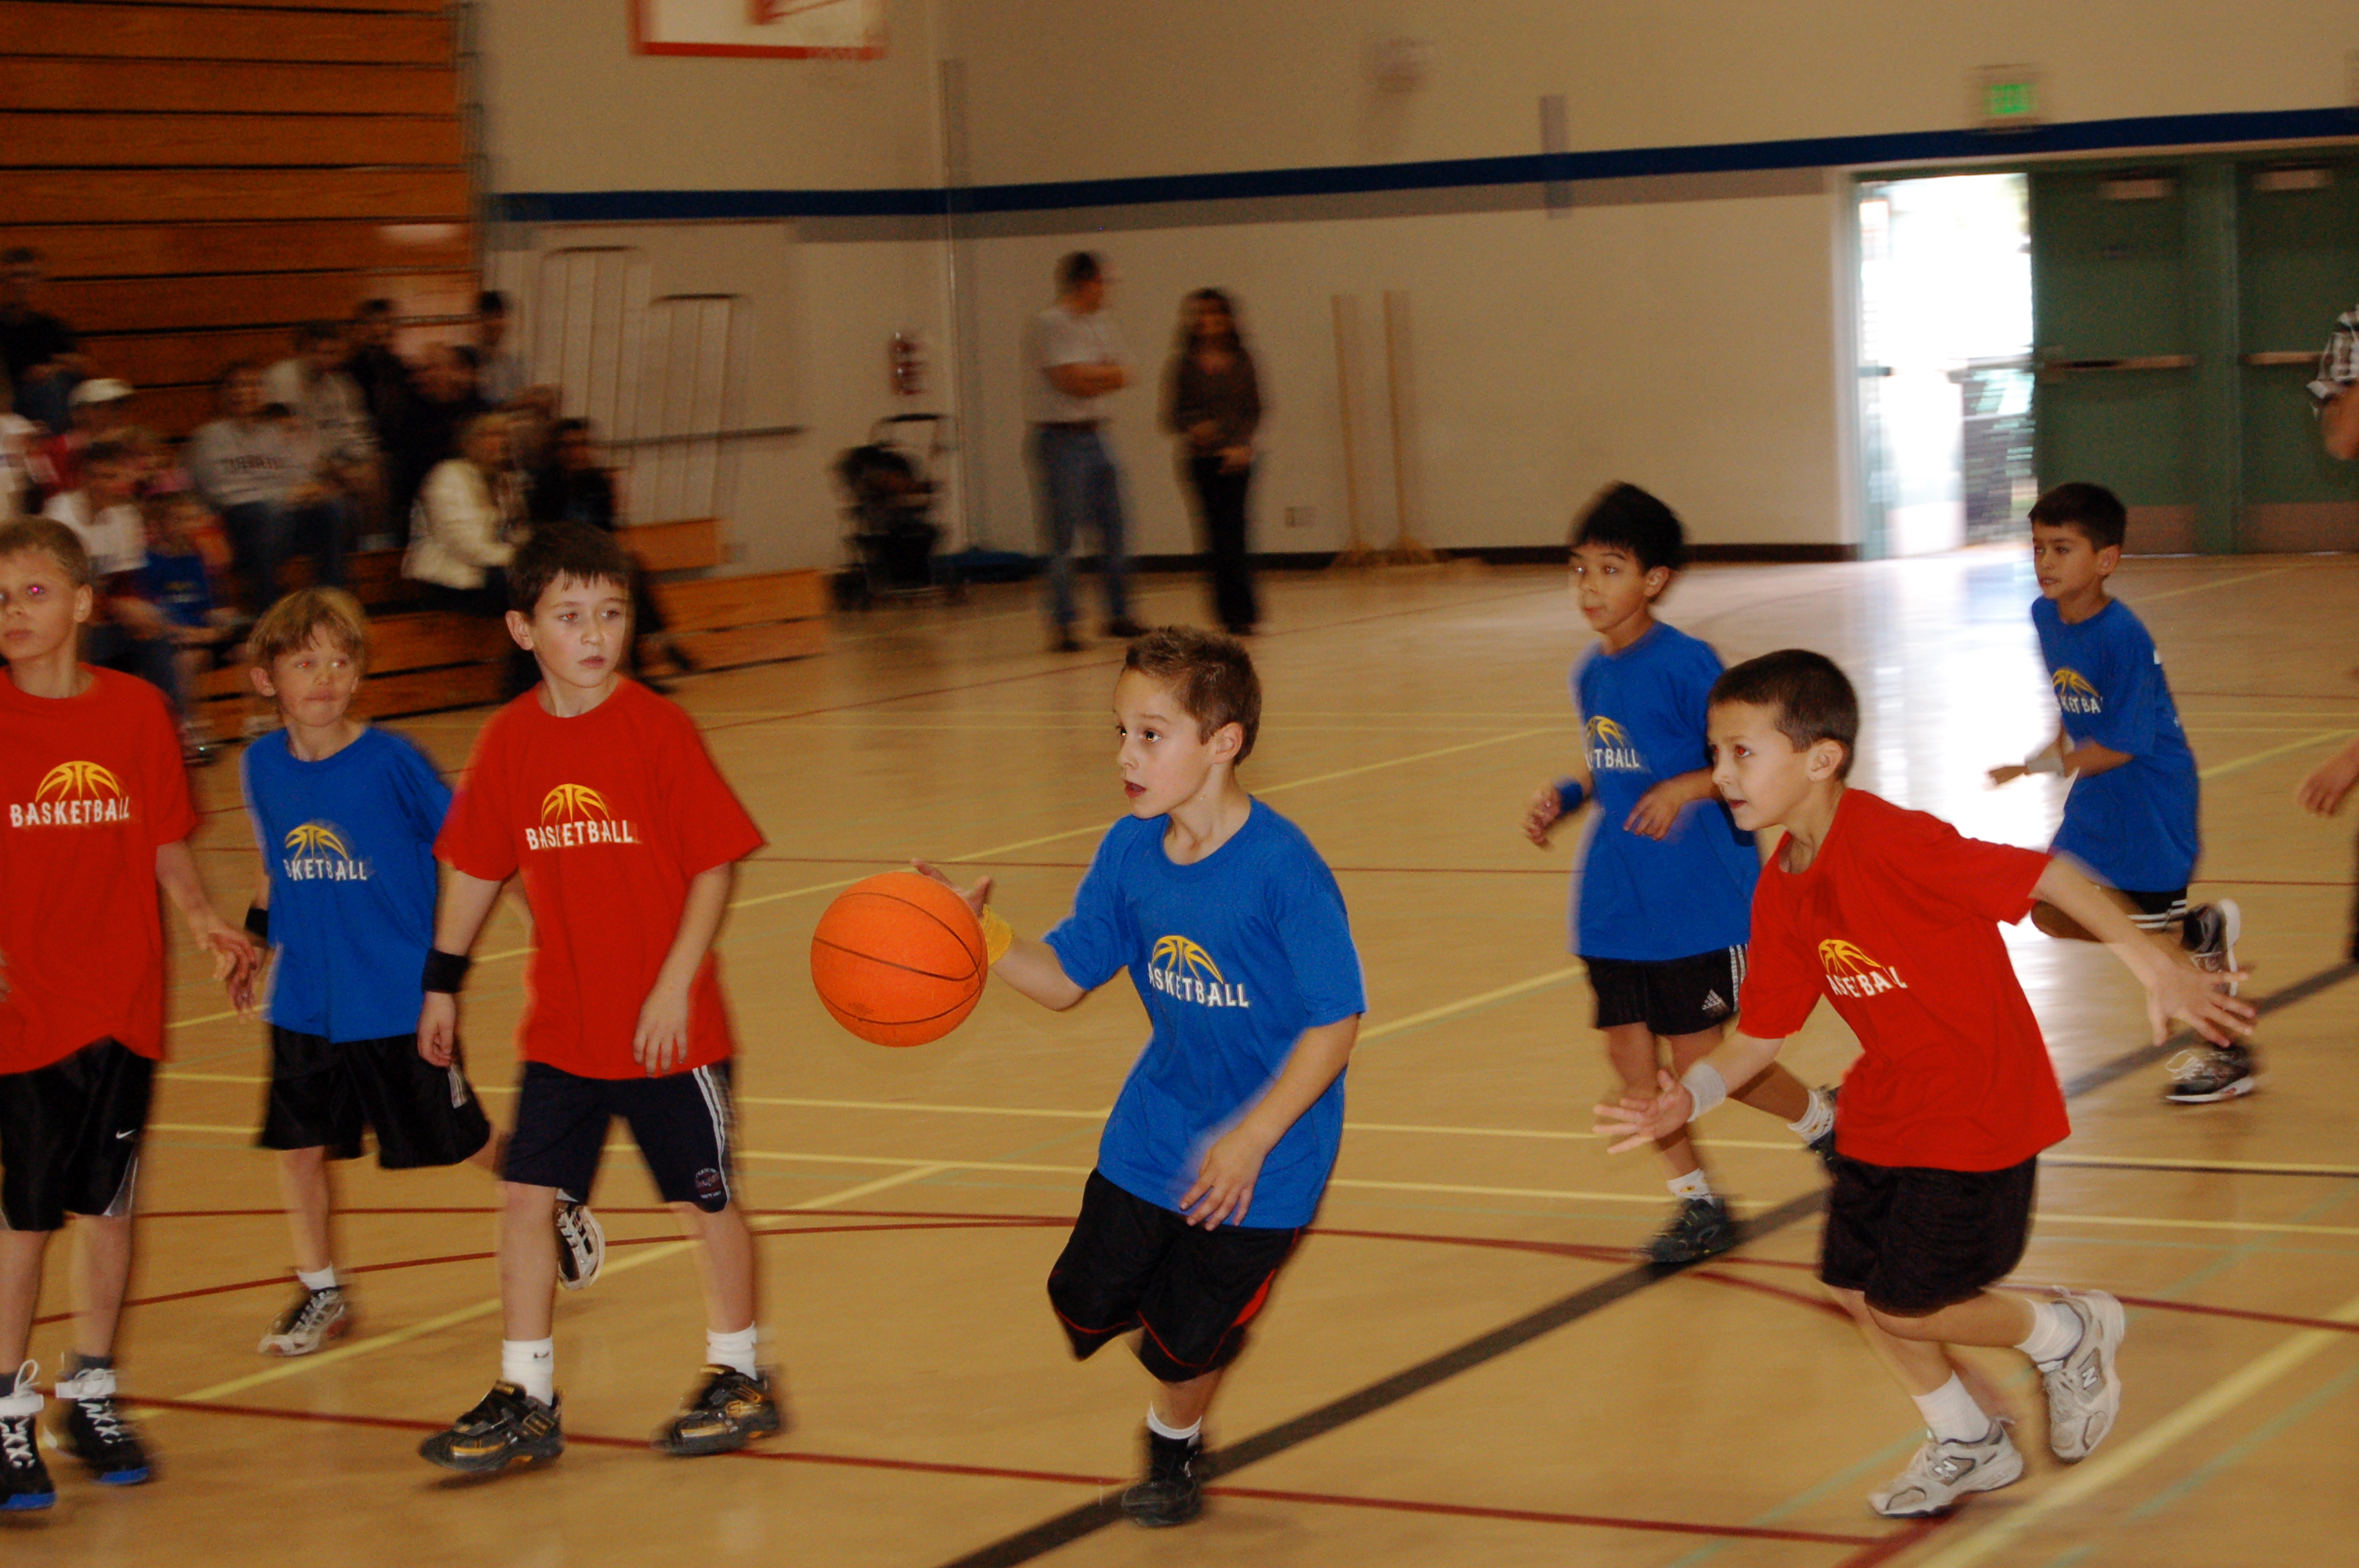 Kids playing basketball.